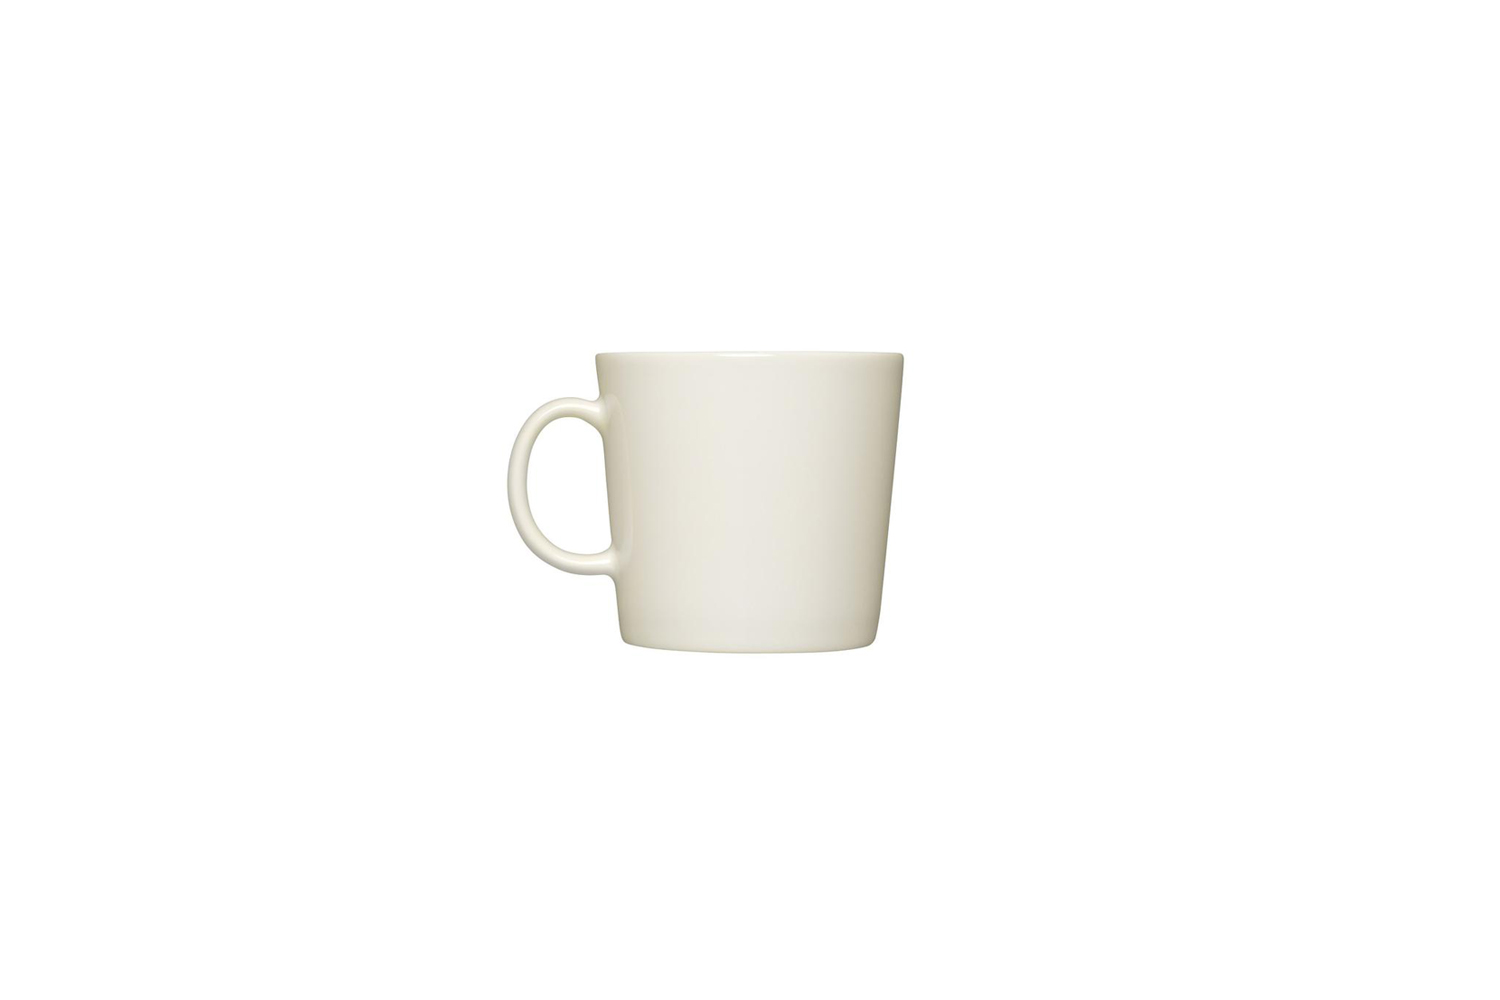 designed by kaj franck for iittala, the teema mug in white is $25 at danish d 11